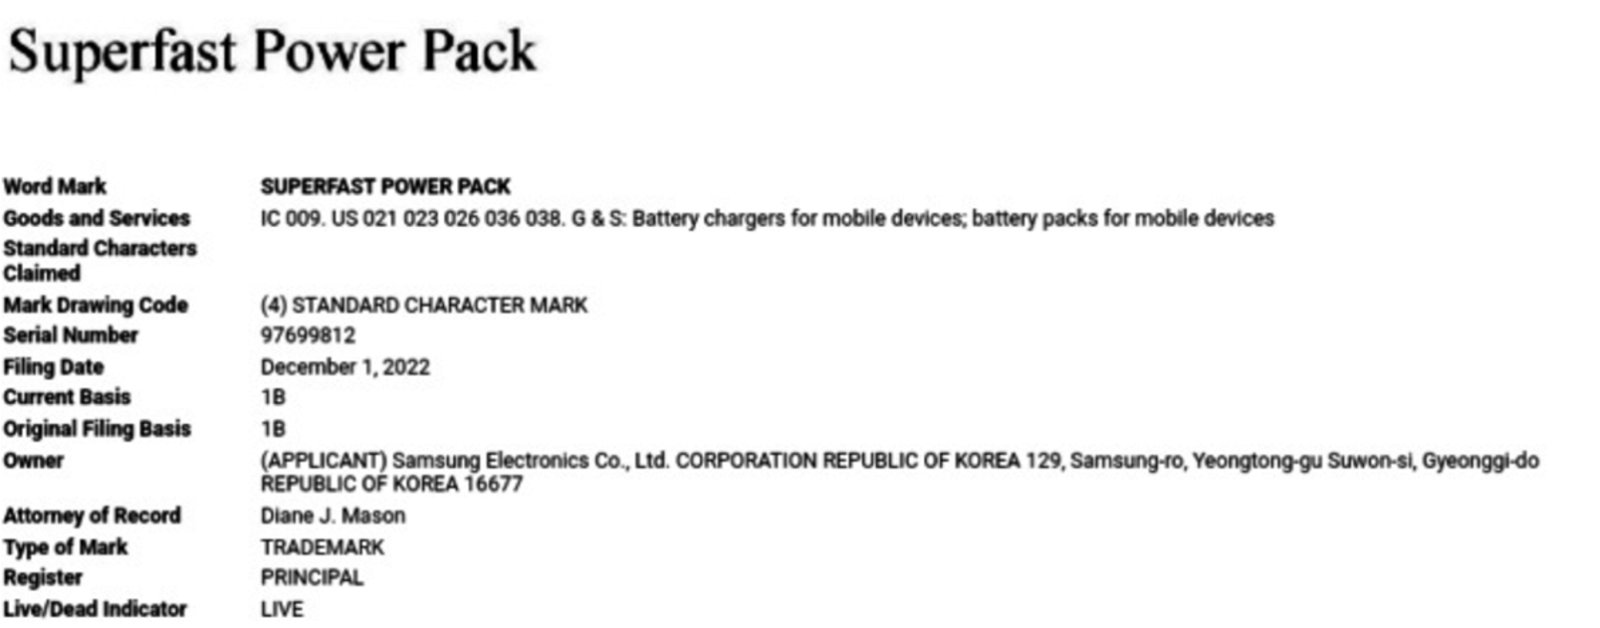 Samsung Superfast Power Pack